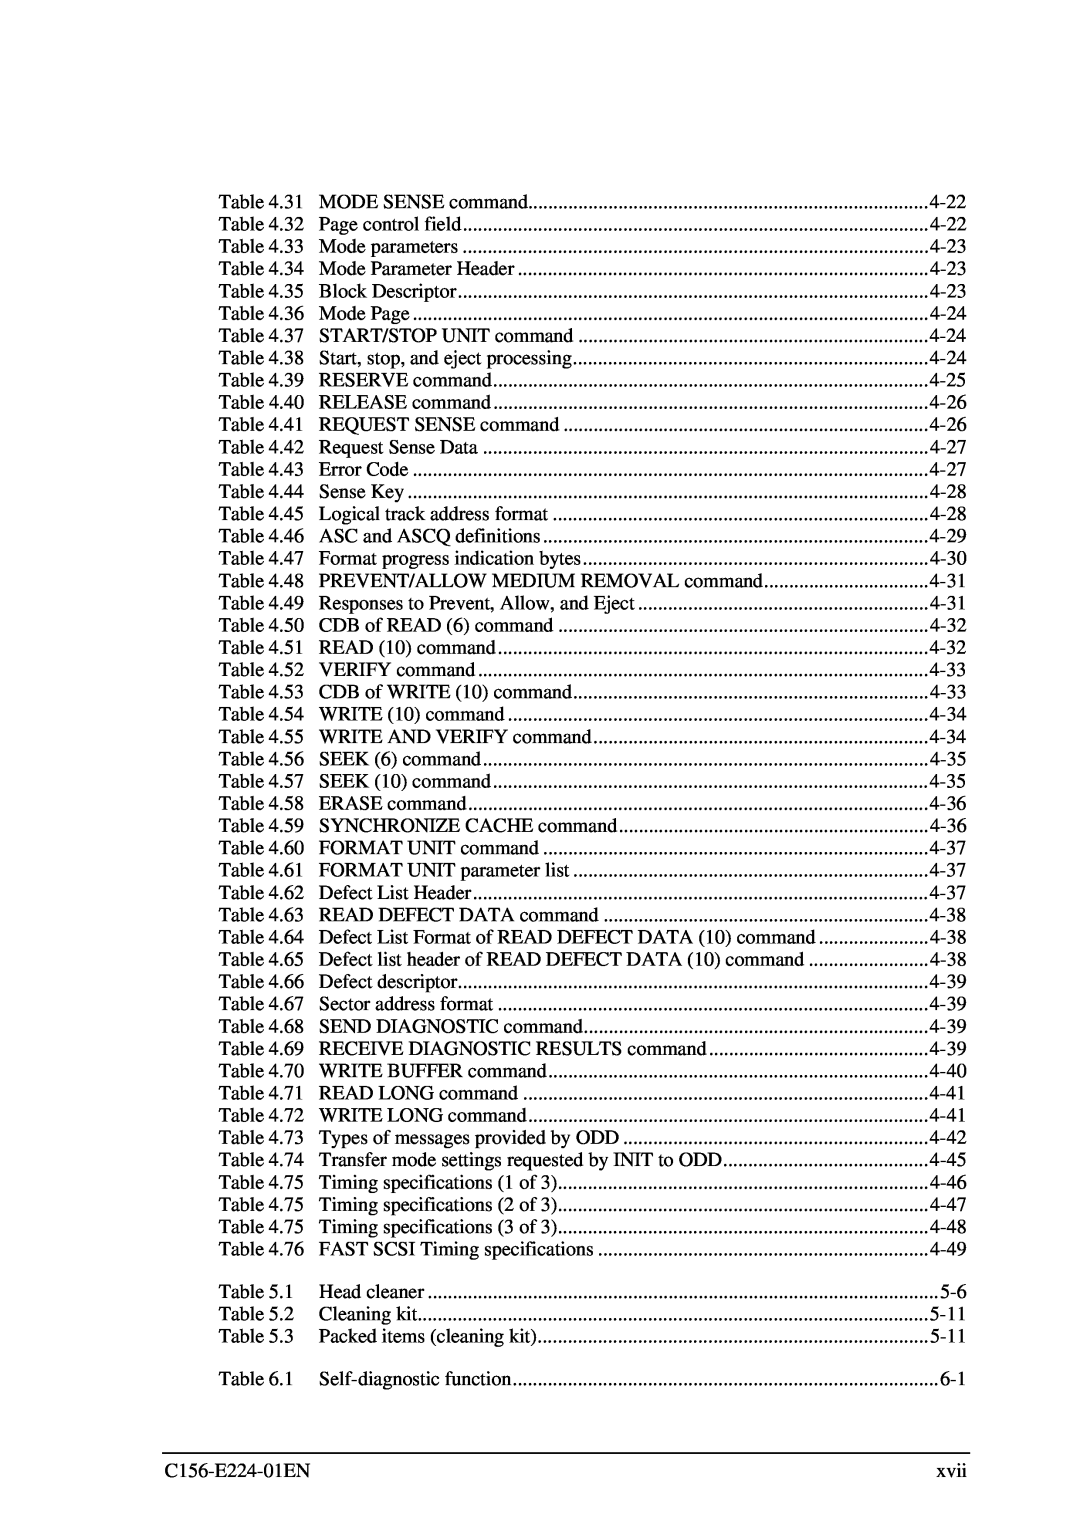 Fujitsu MCJ3230SS manual PREVENT/ALLOW MEDIUM REMOVAL command, Defect List Format of READ DEFECT DATA 10 command 